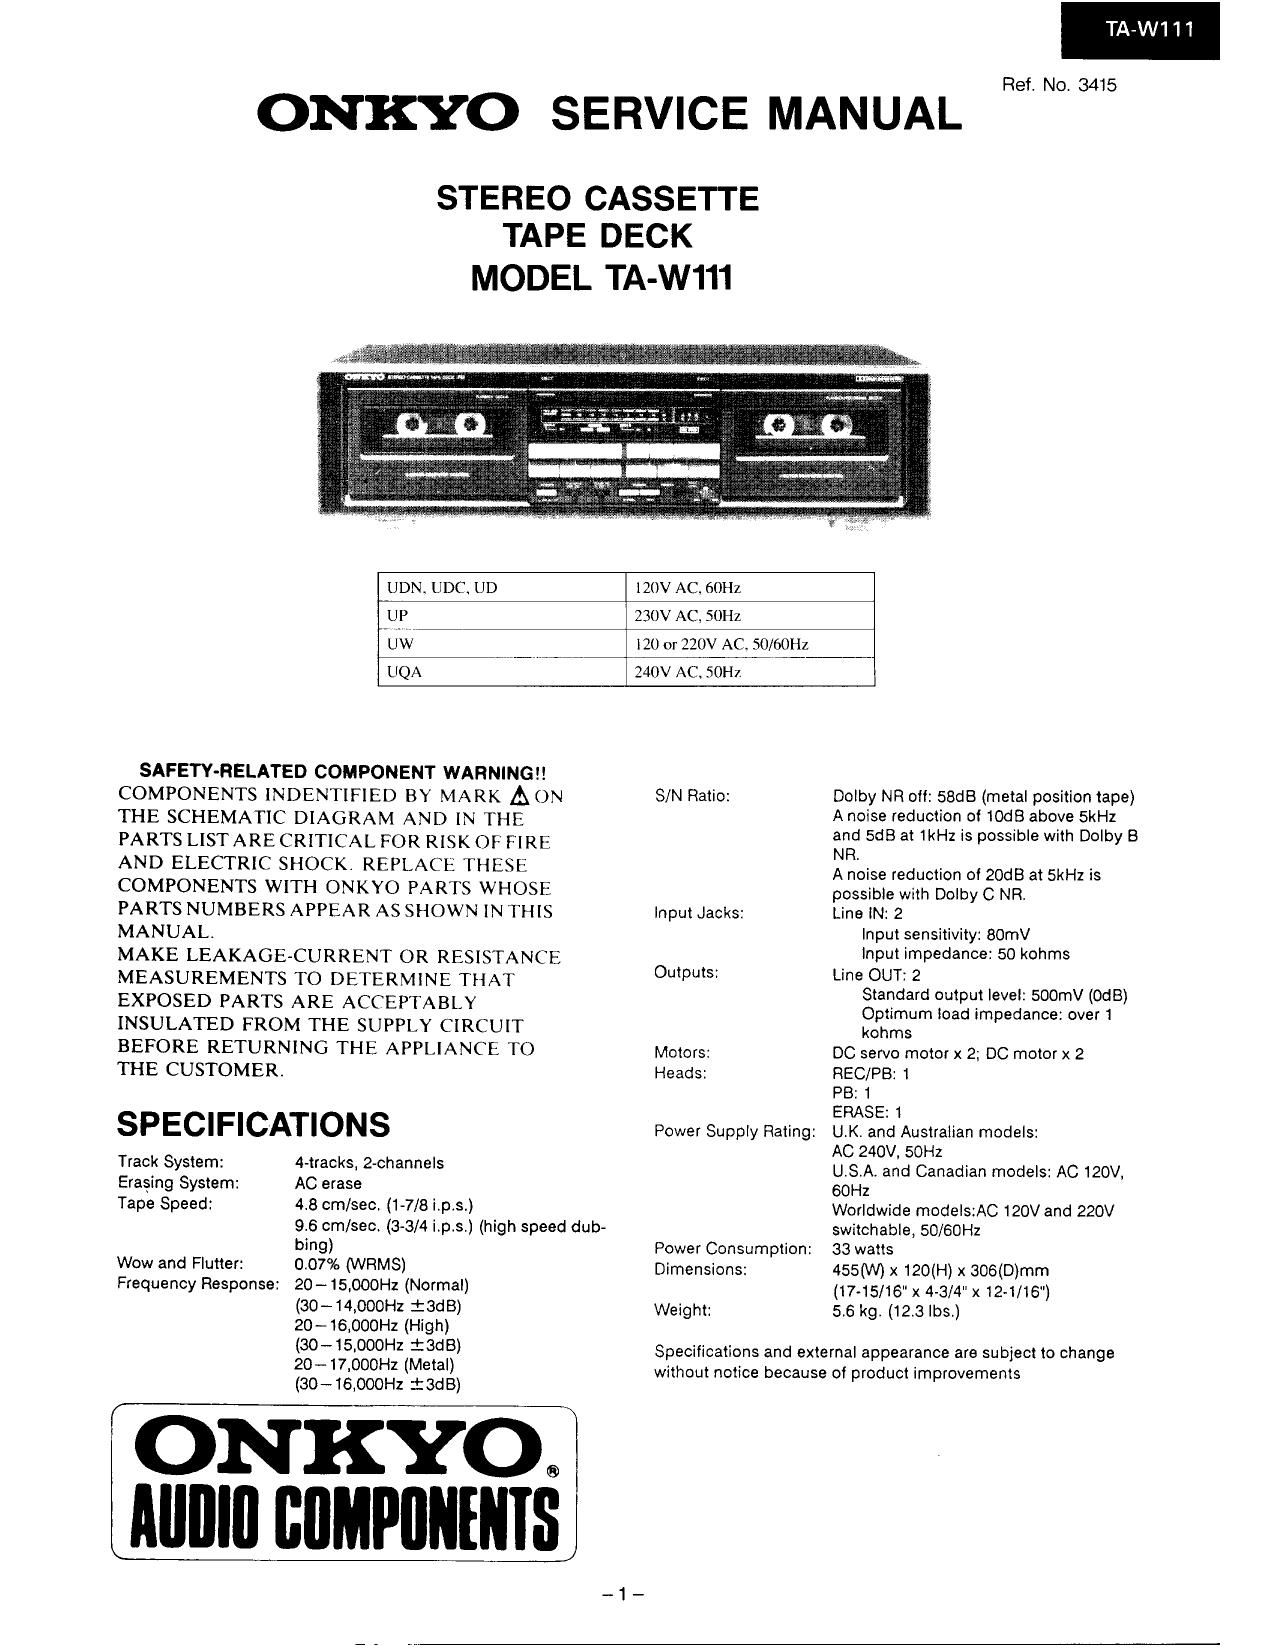 Onkyo TAW 111 Service Manual